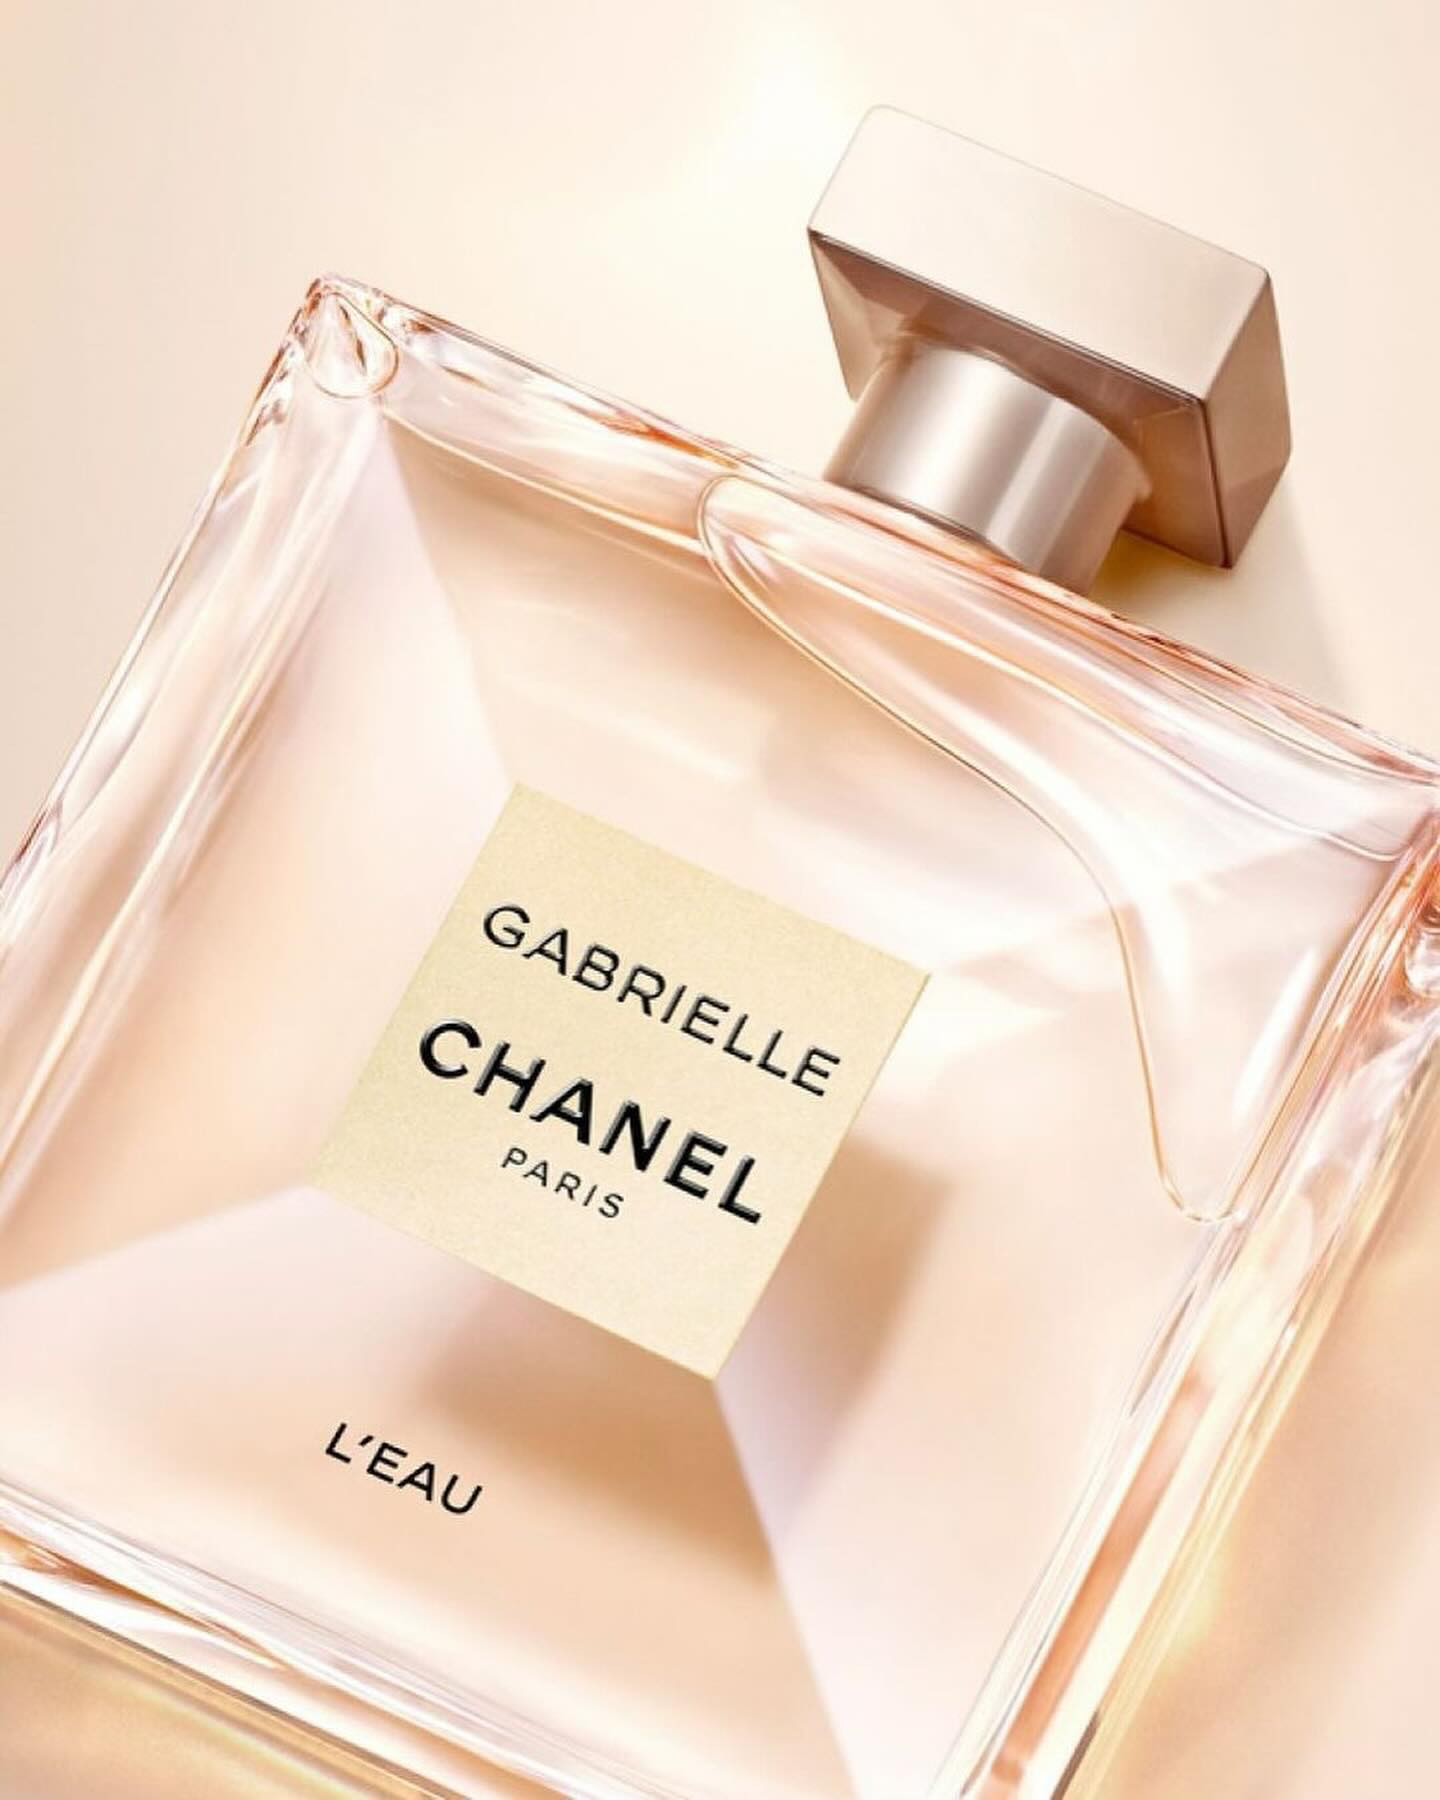 Chanel Gabrielle L Eau Fragrance